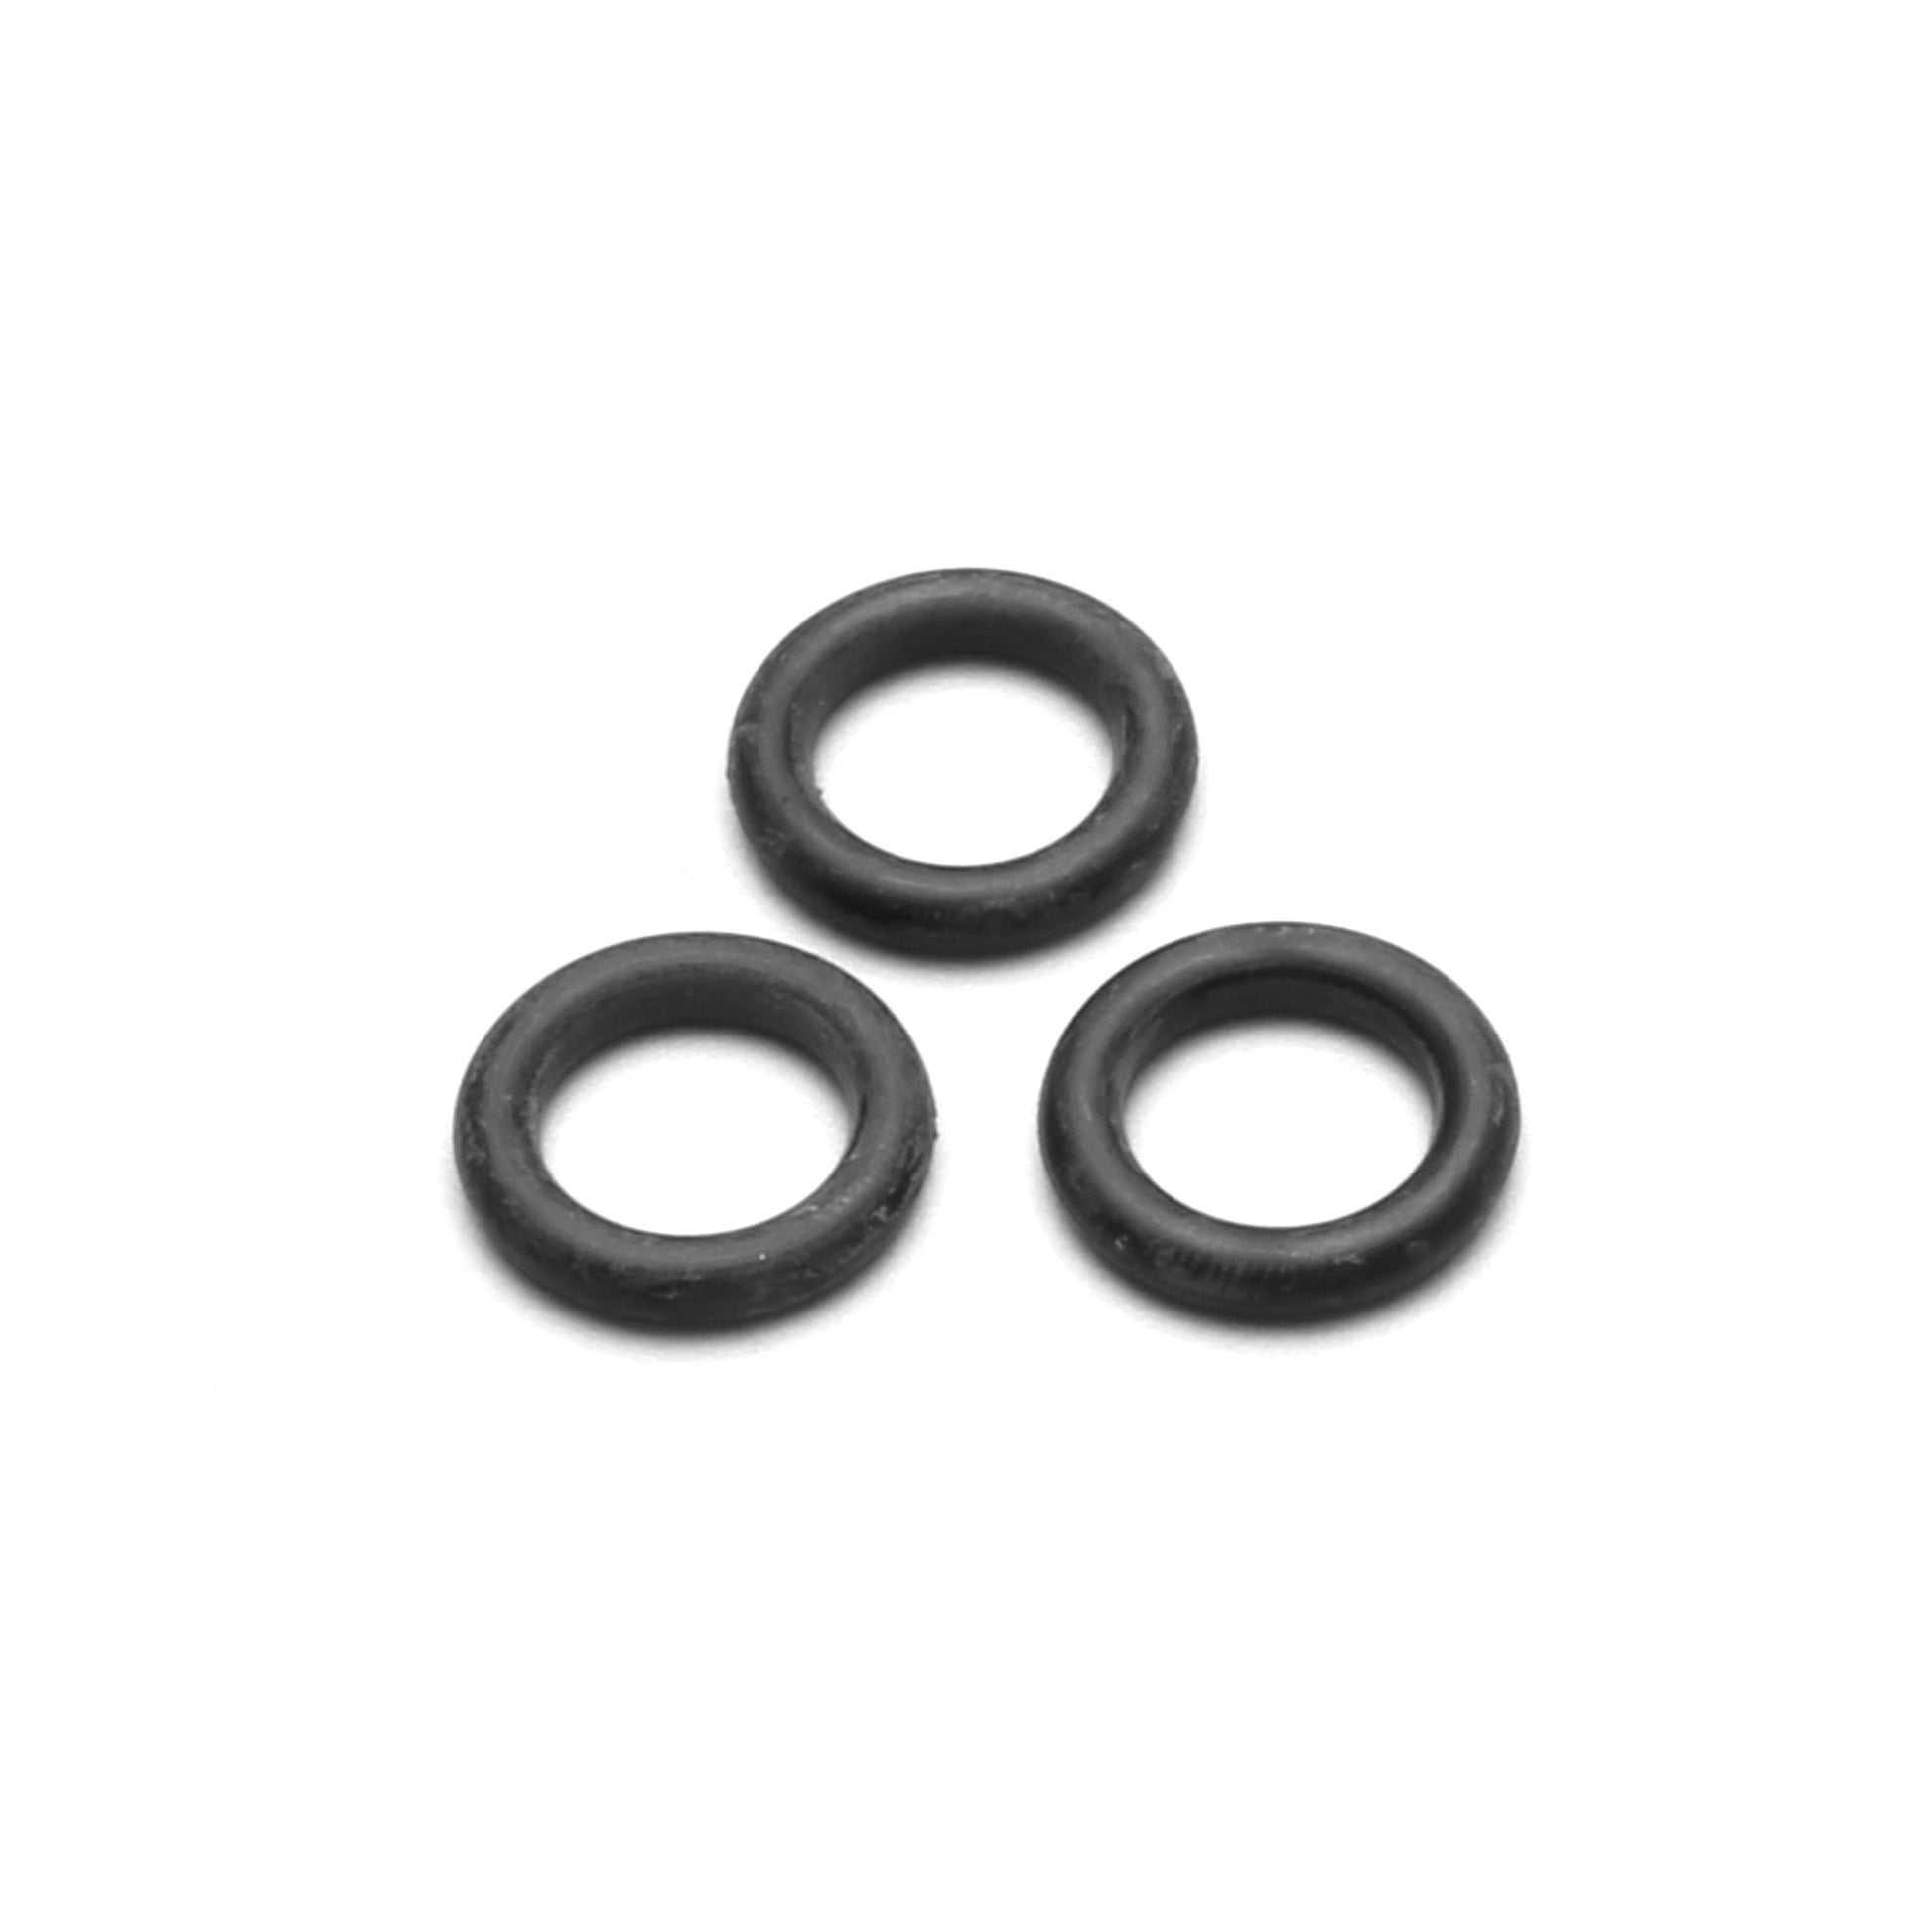 3 black o-rings